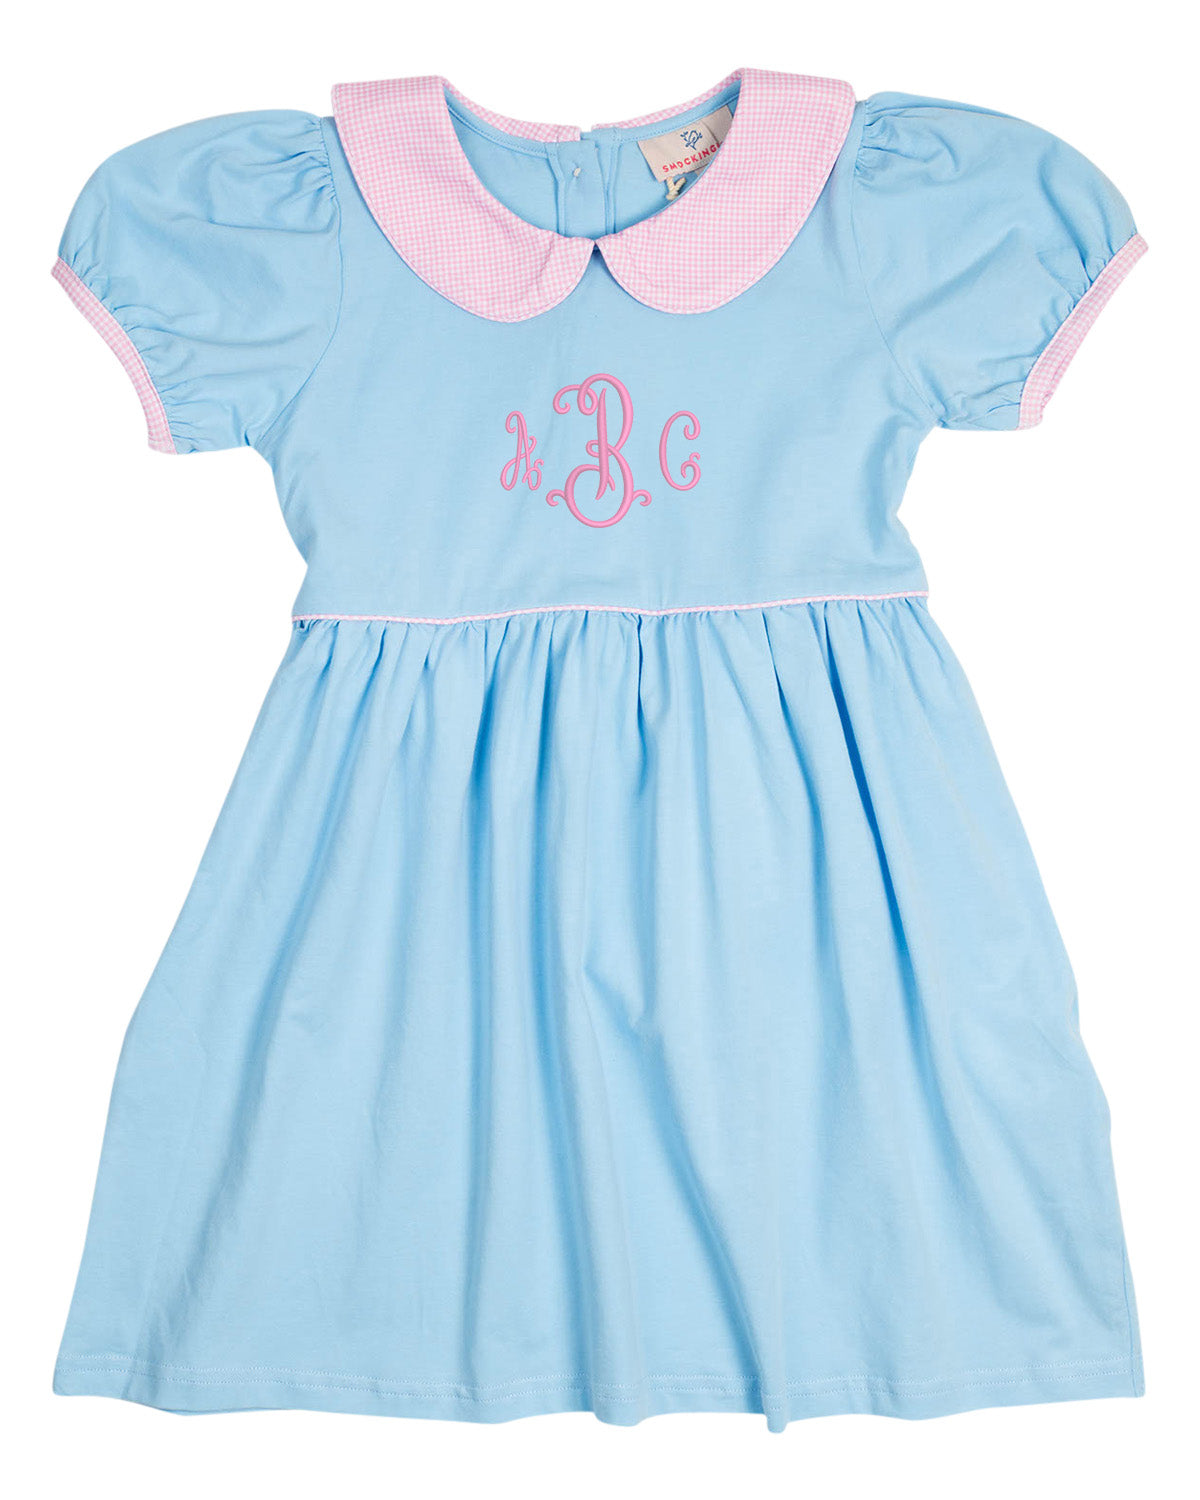 Blue and Pink Knit Peter Pan Dress